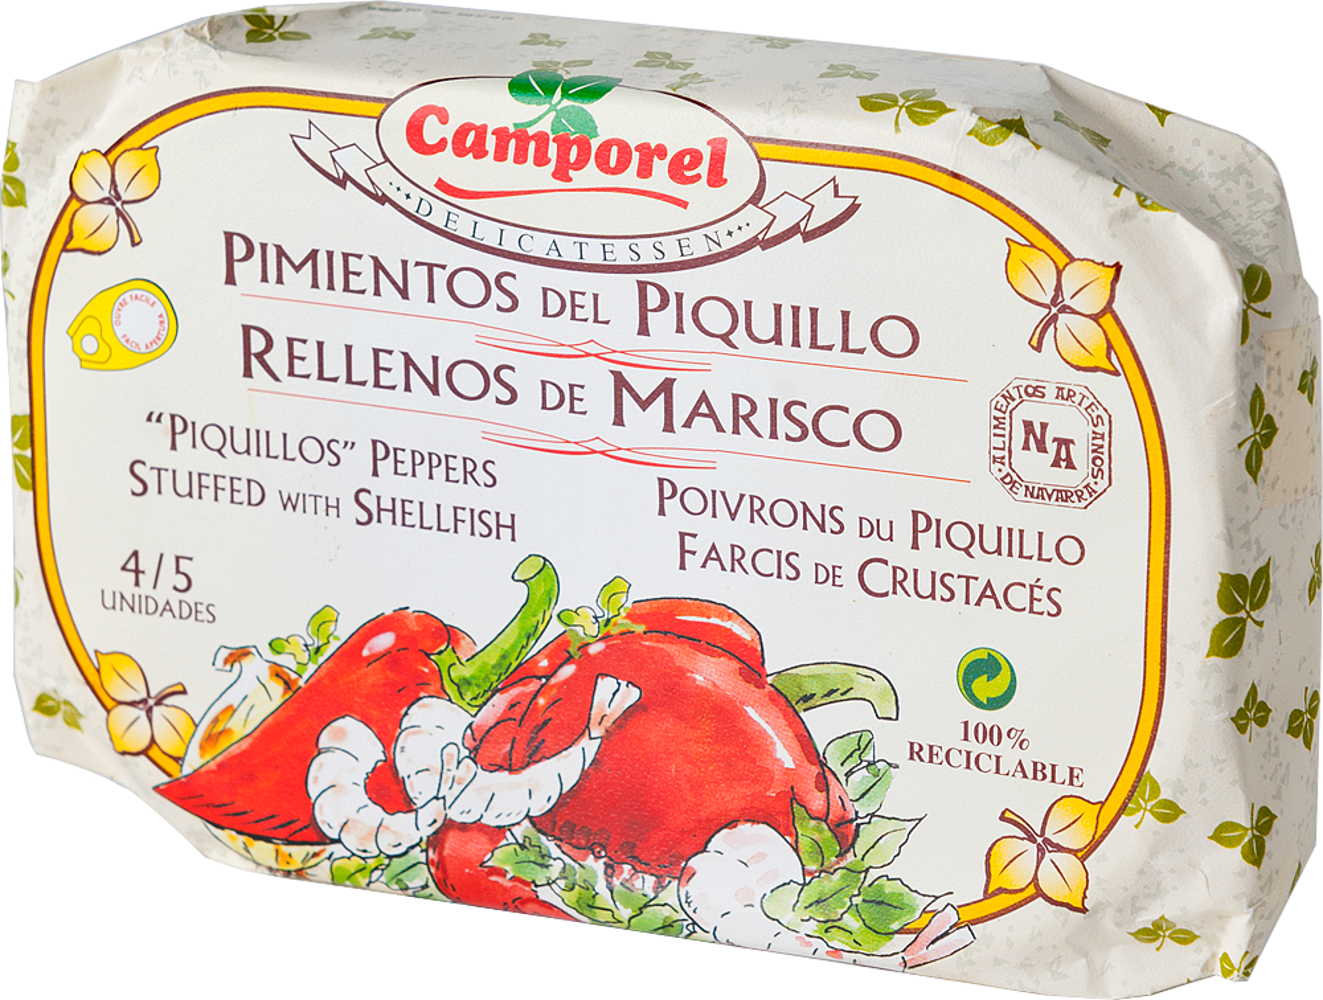 Camporel Pimientos del piquillo rellenos de Marisco (gefüllte Paprikaschoten) 280g